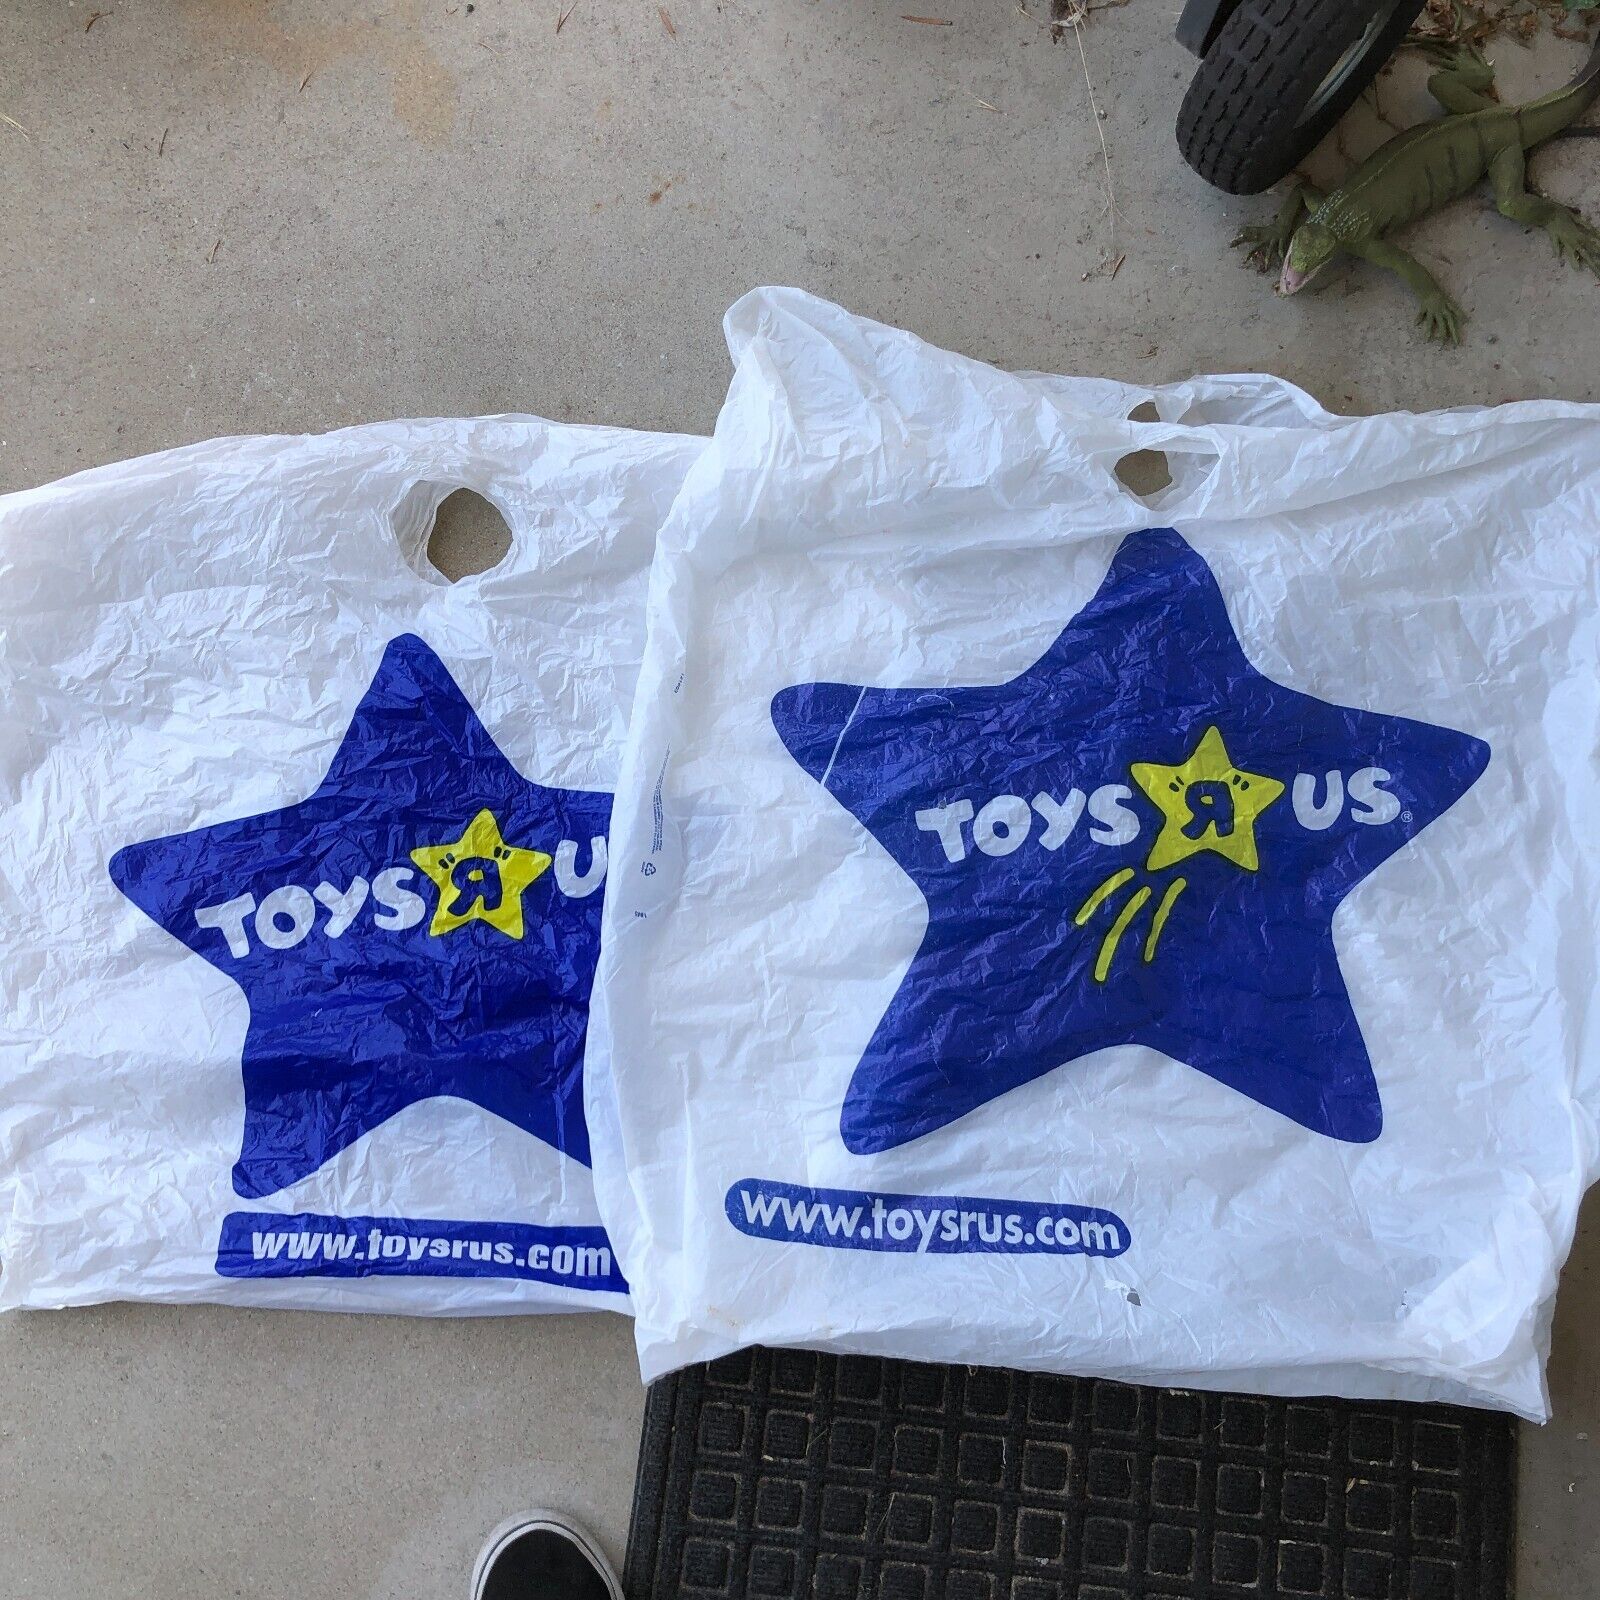 Lot Of 2: Vintage Toys’r’us Large Plastic Shopping Bag 29 X 30 Star Bags Jumbo